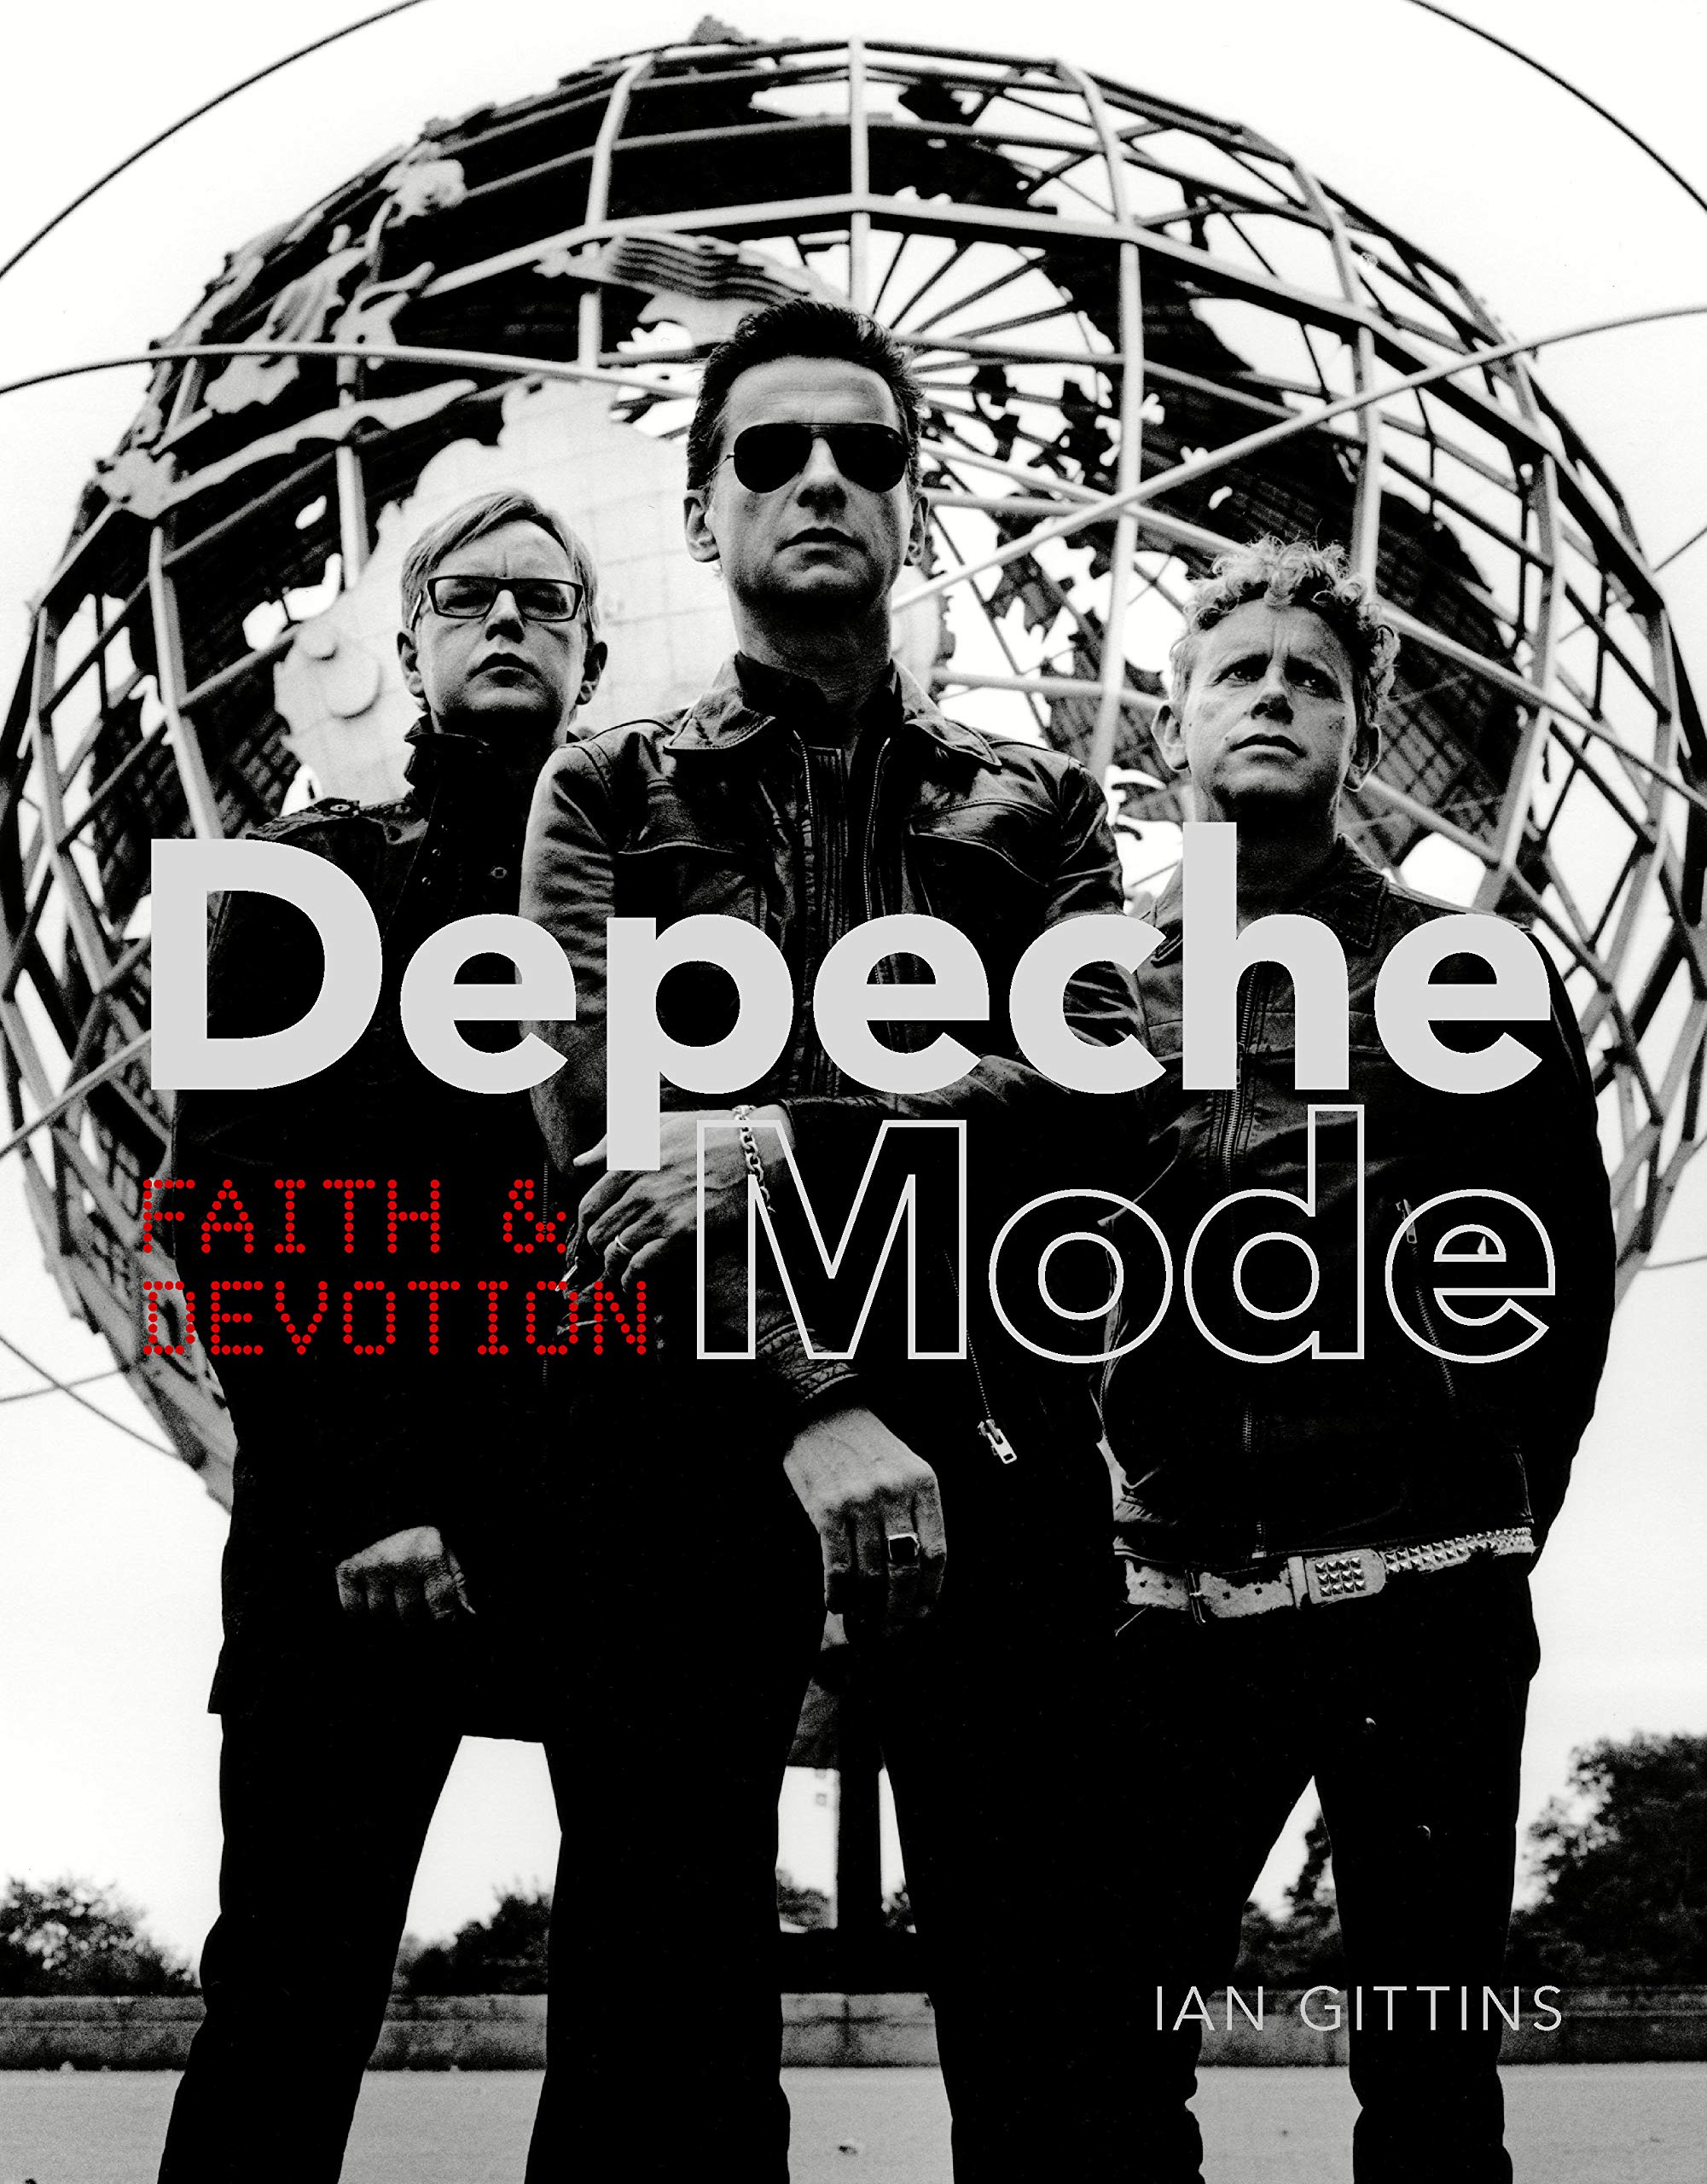 depeche mode koncert 2019 magyarországon online